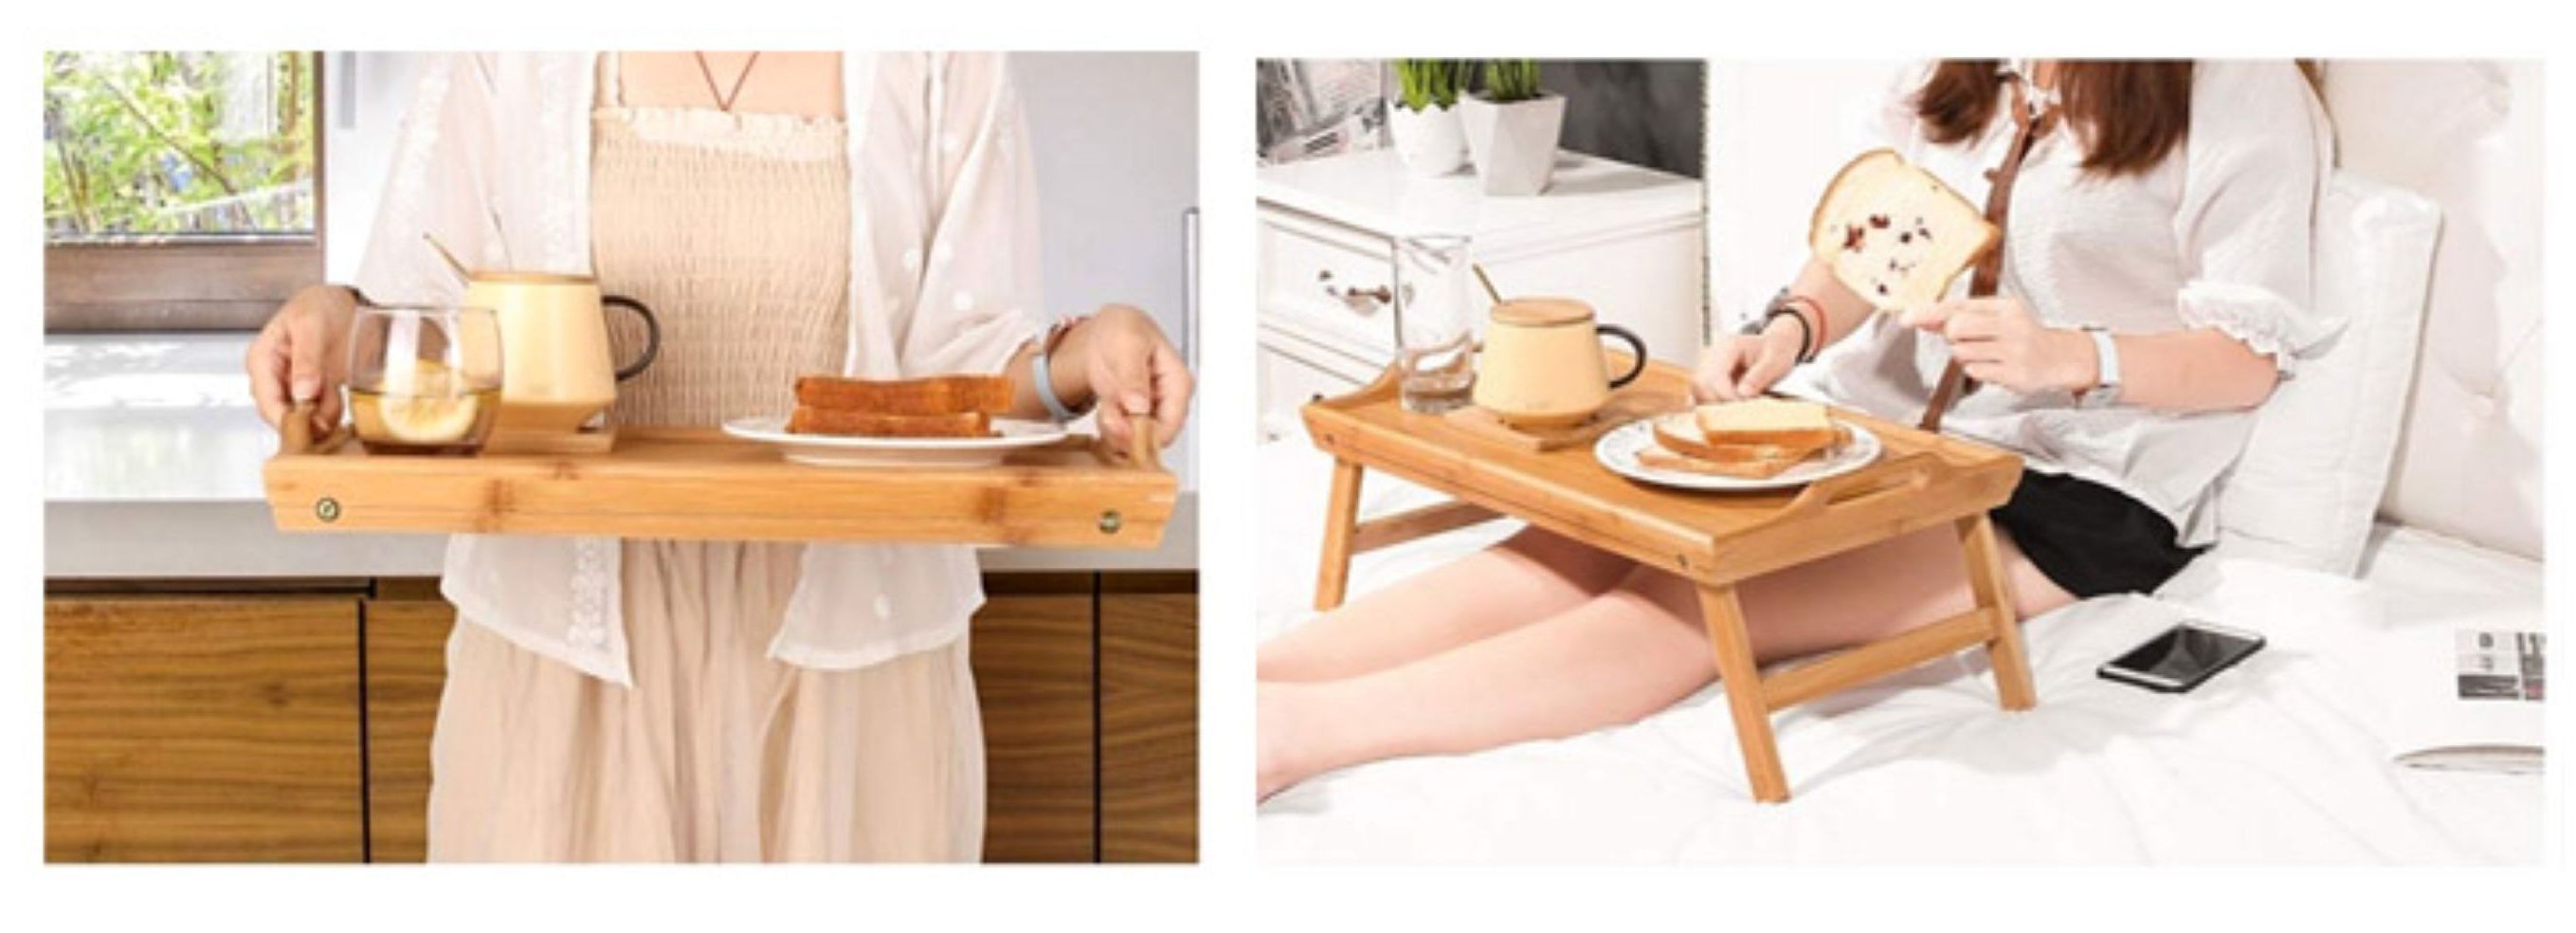 Бамбуковый столик для завтрака